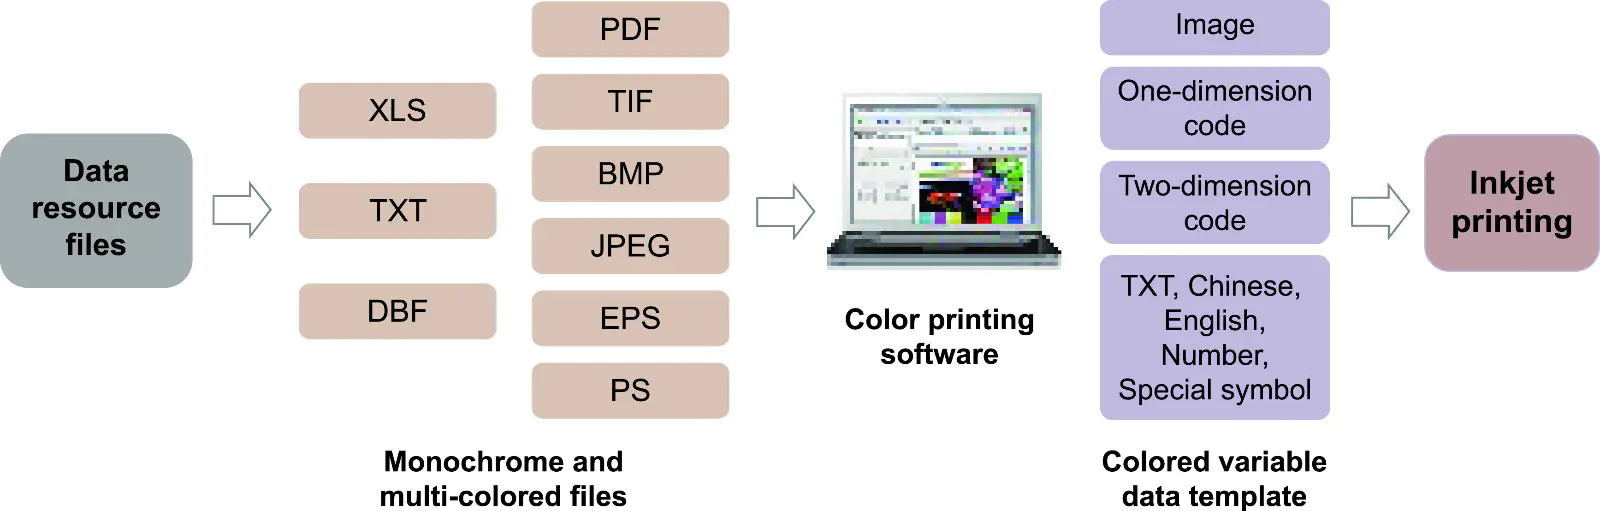 Arojet multicolored industrial inkjet marking supplier for film